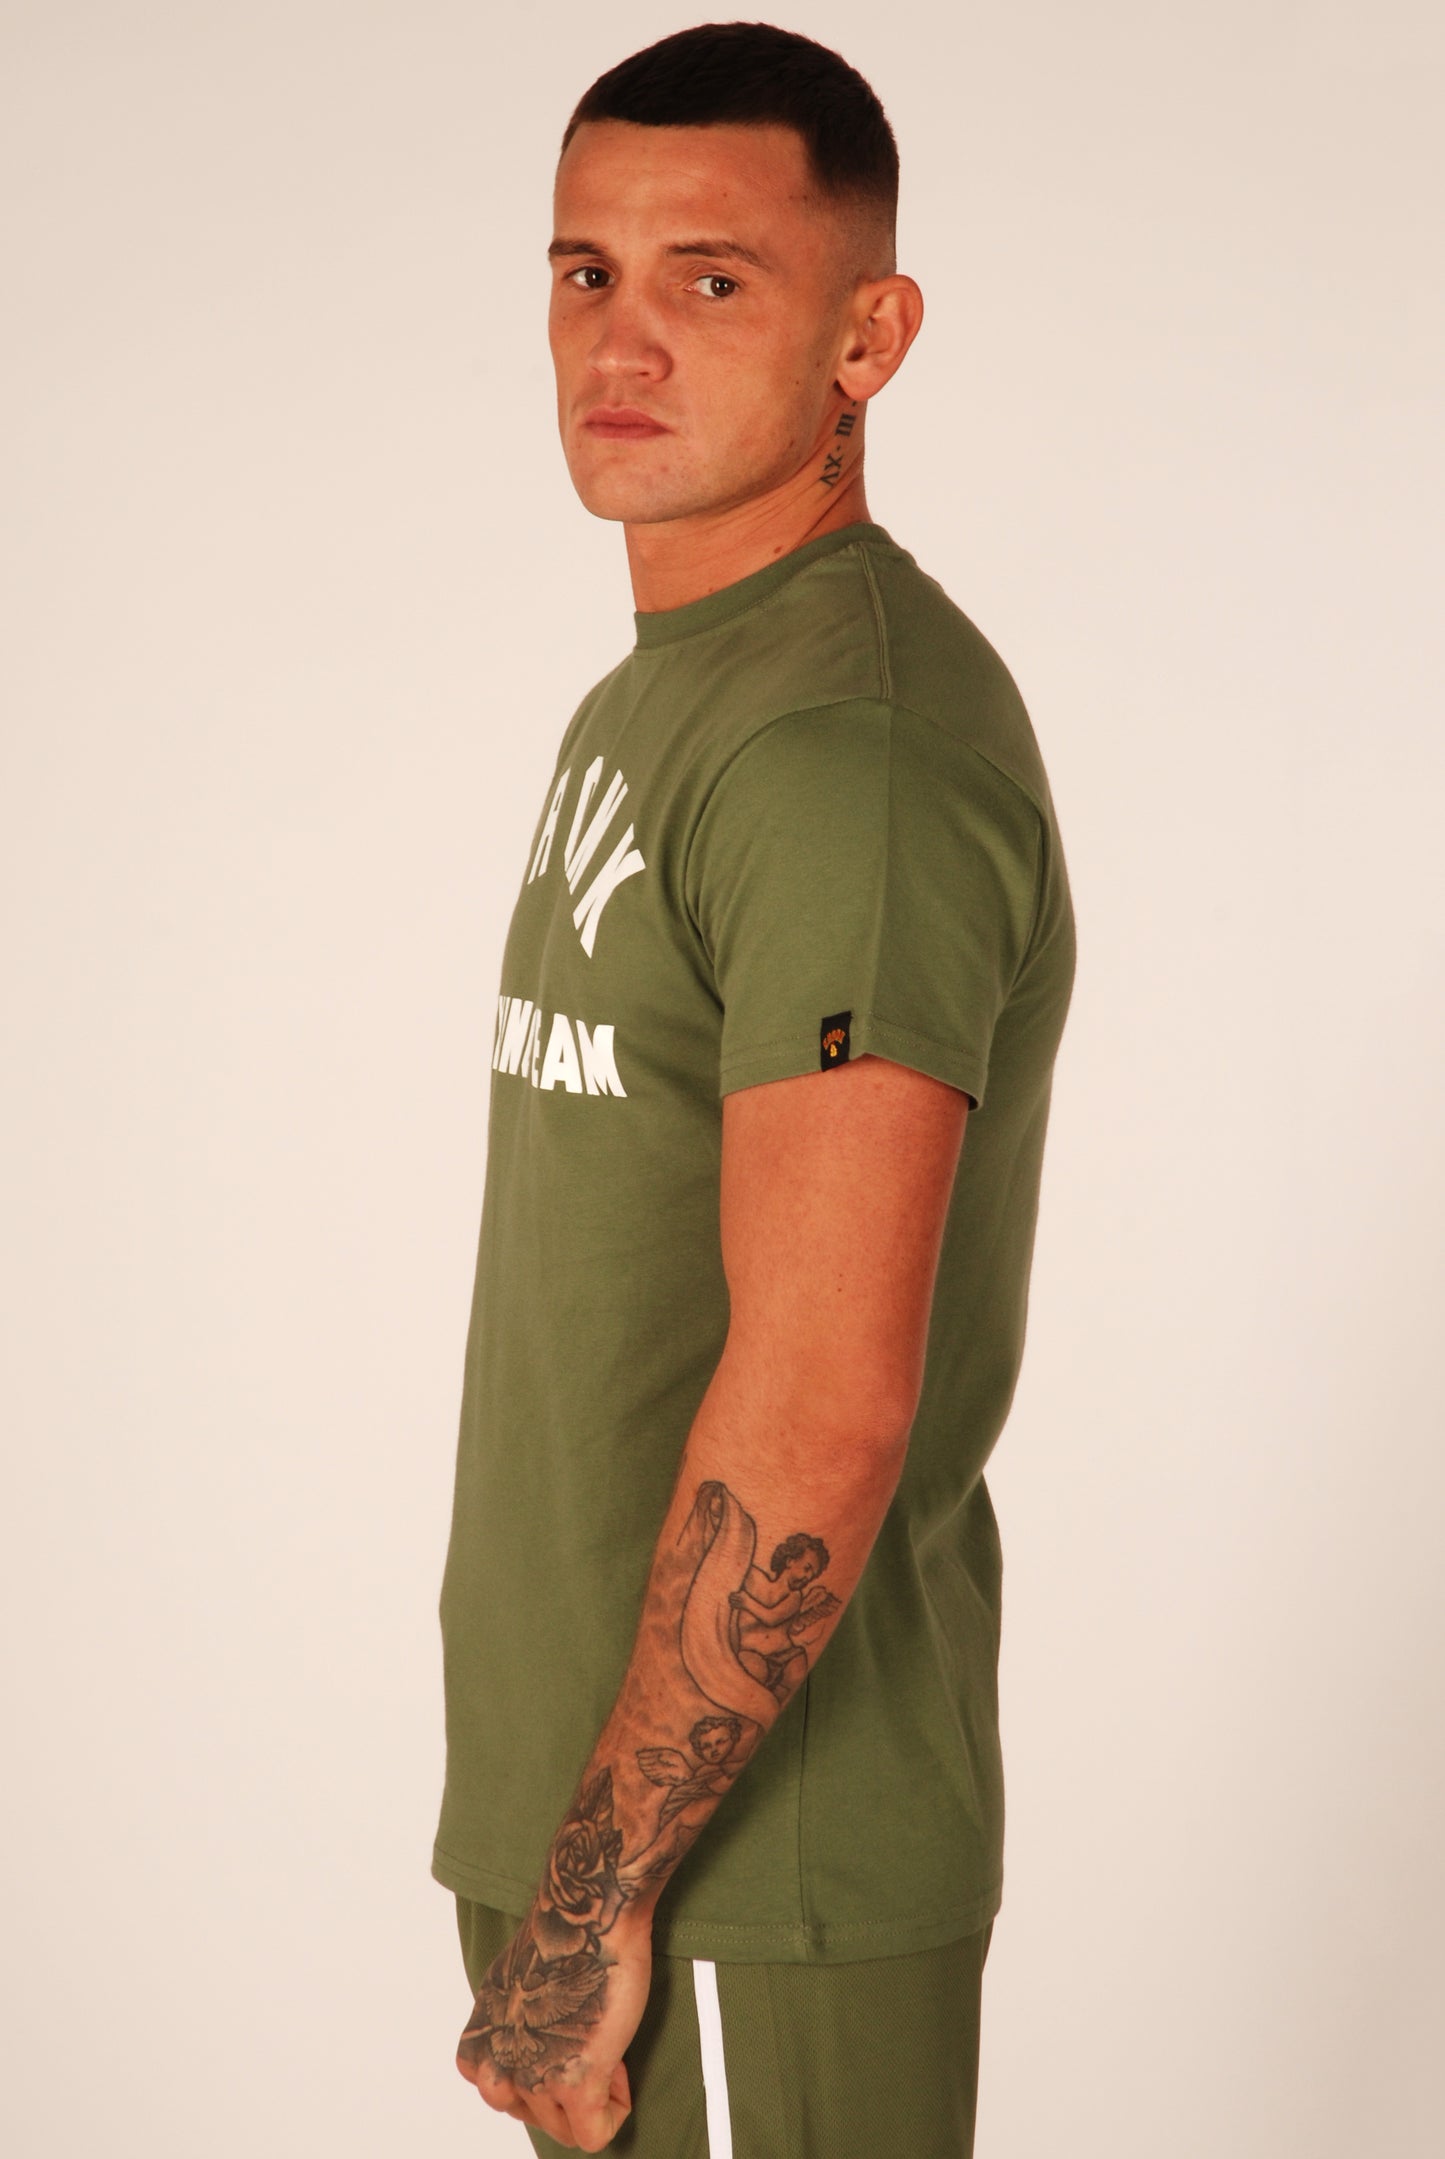 KRONK Boxing Team Regular Fit T Shirt Military Green